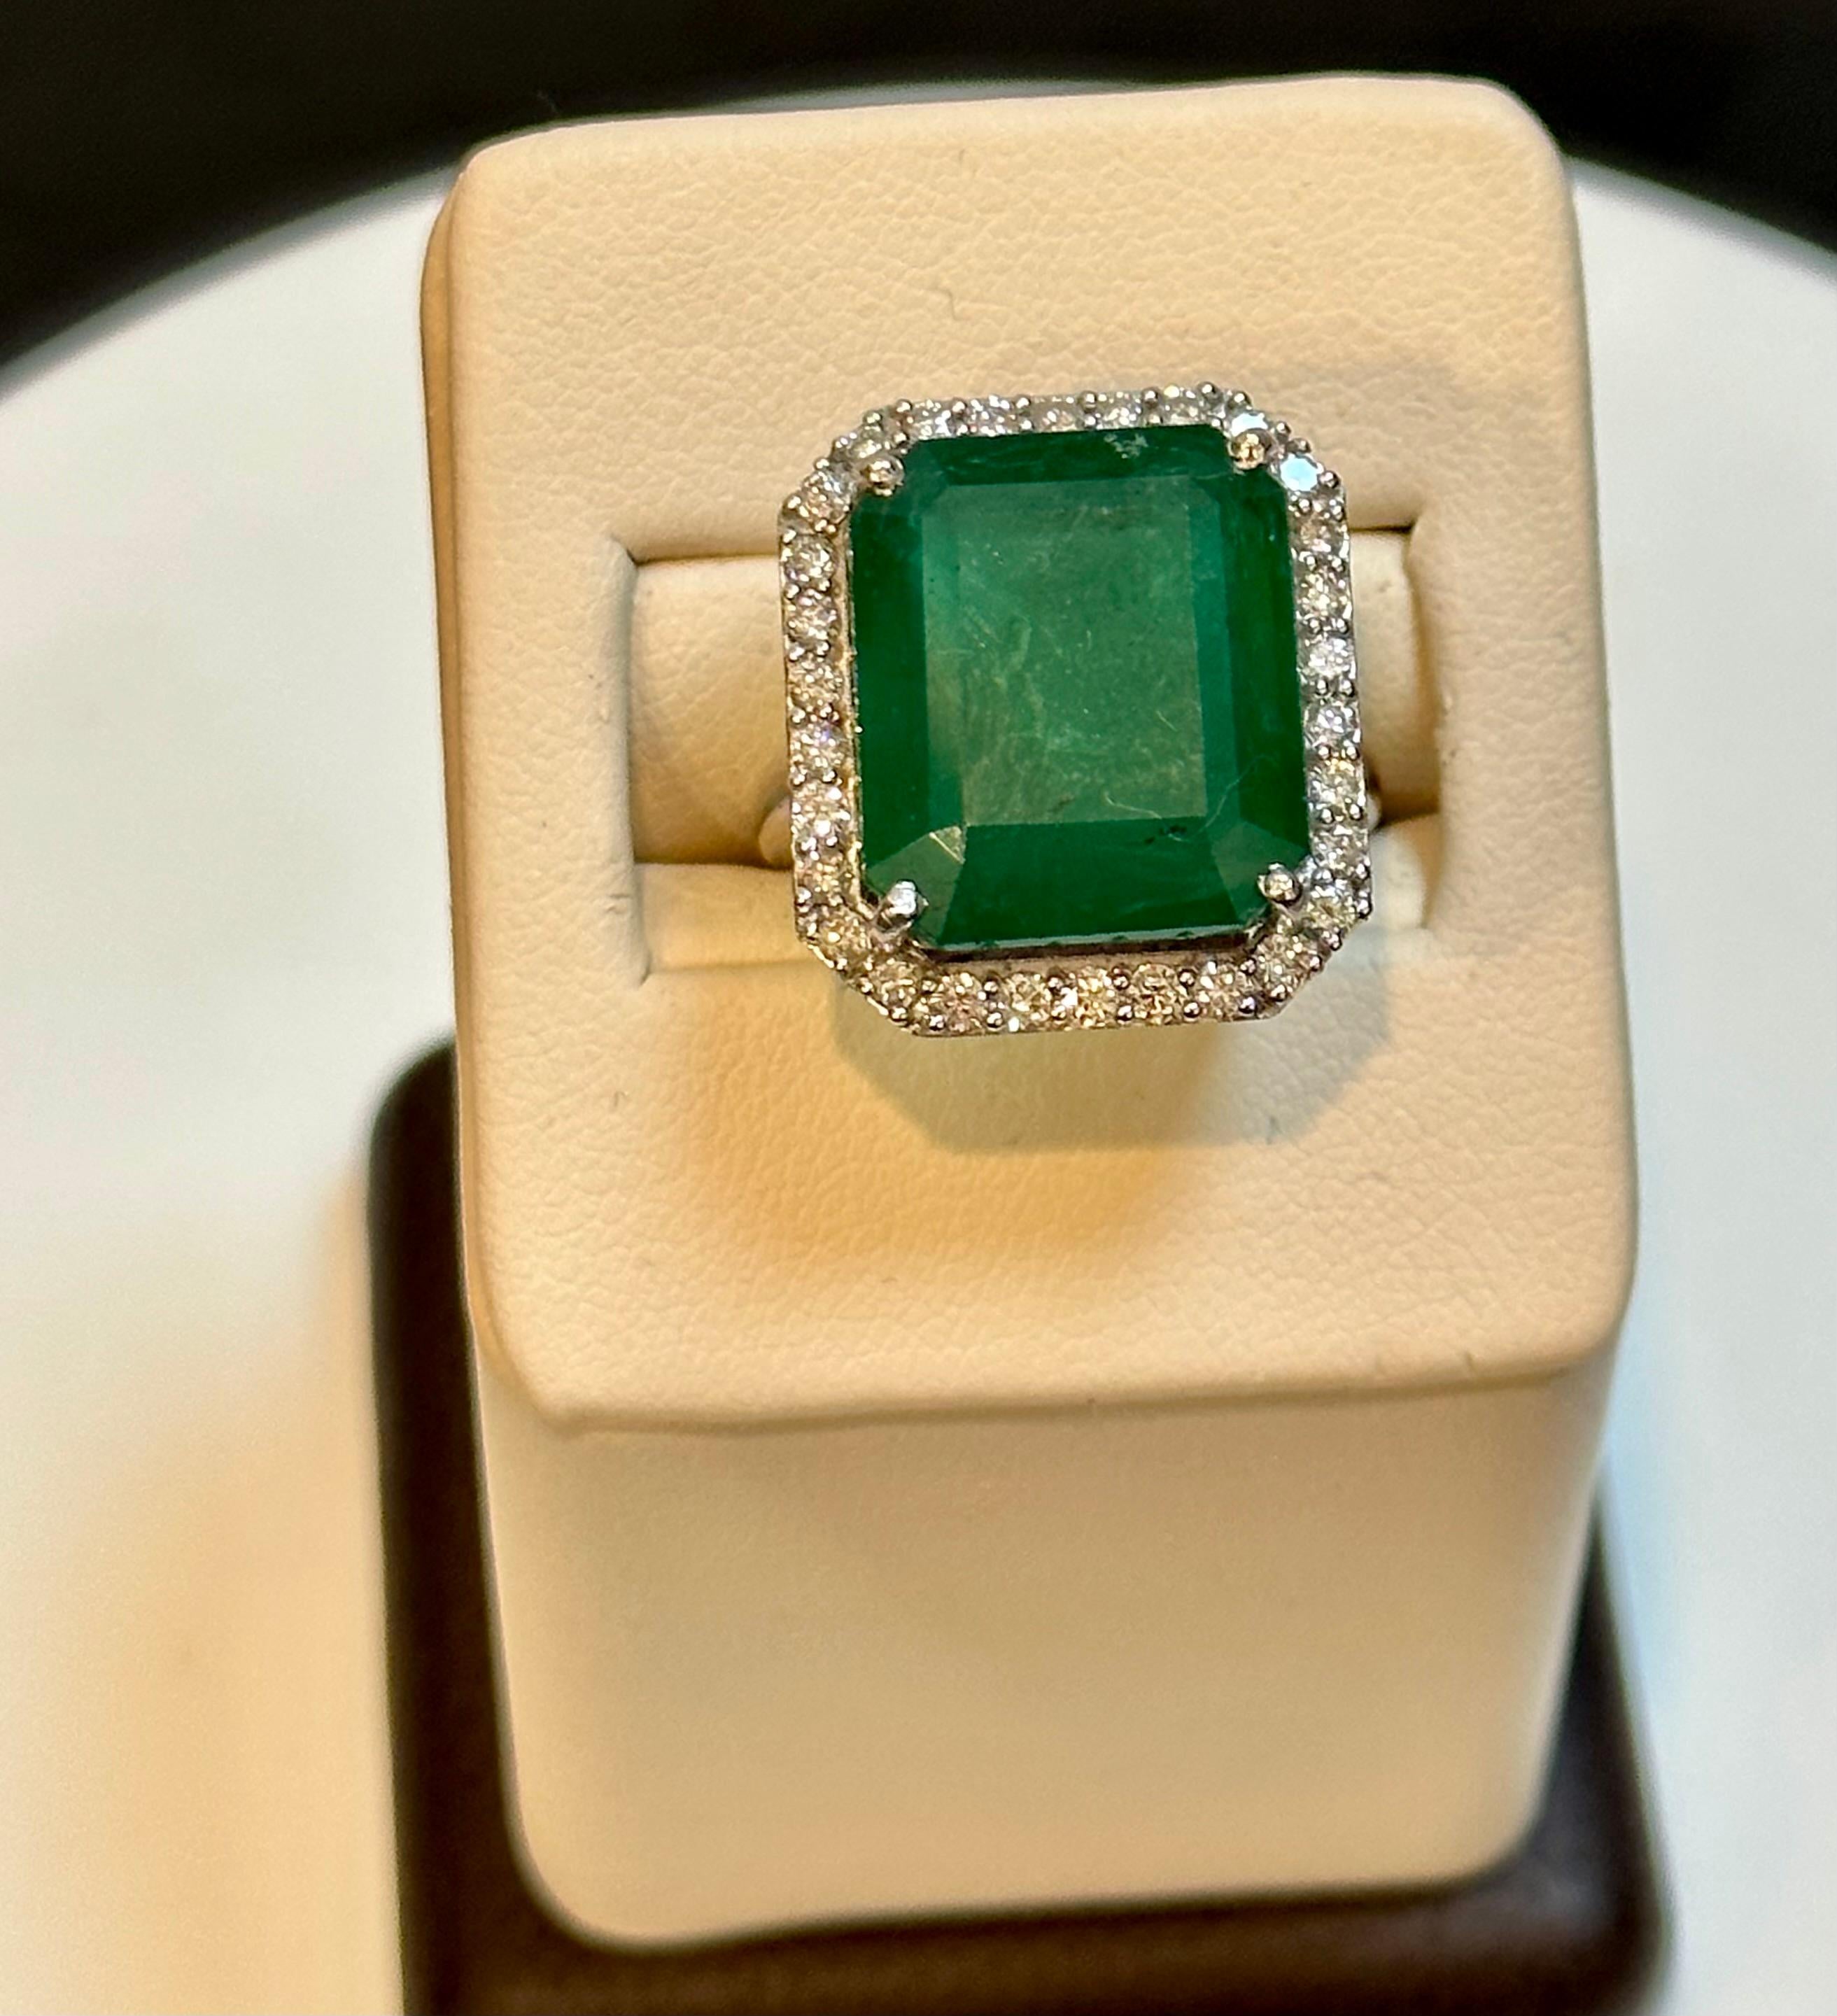 Natural 13 Carat Emerald Cut Zambian Emerald & Diamond Ring in 14kt White Gold For Sale 2